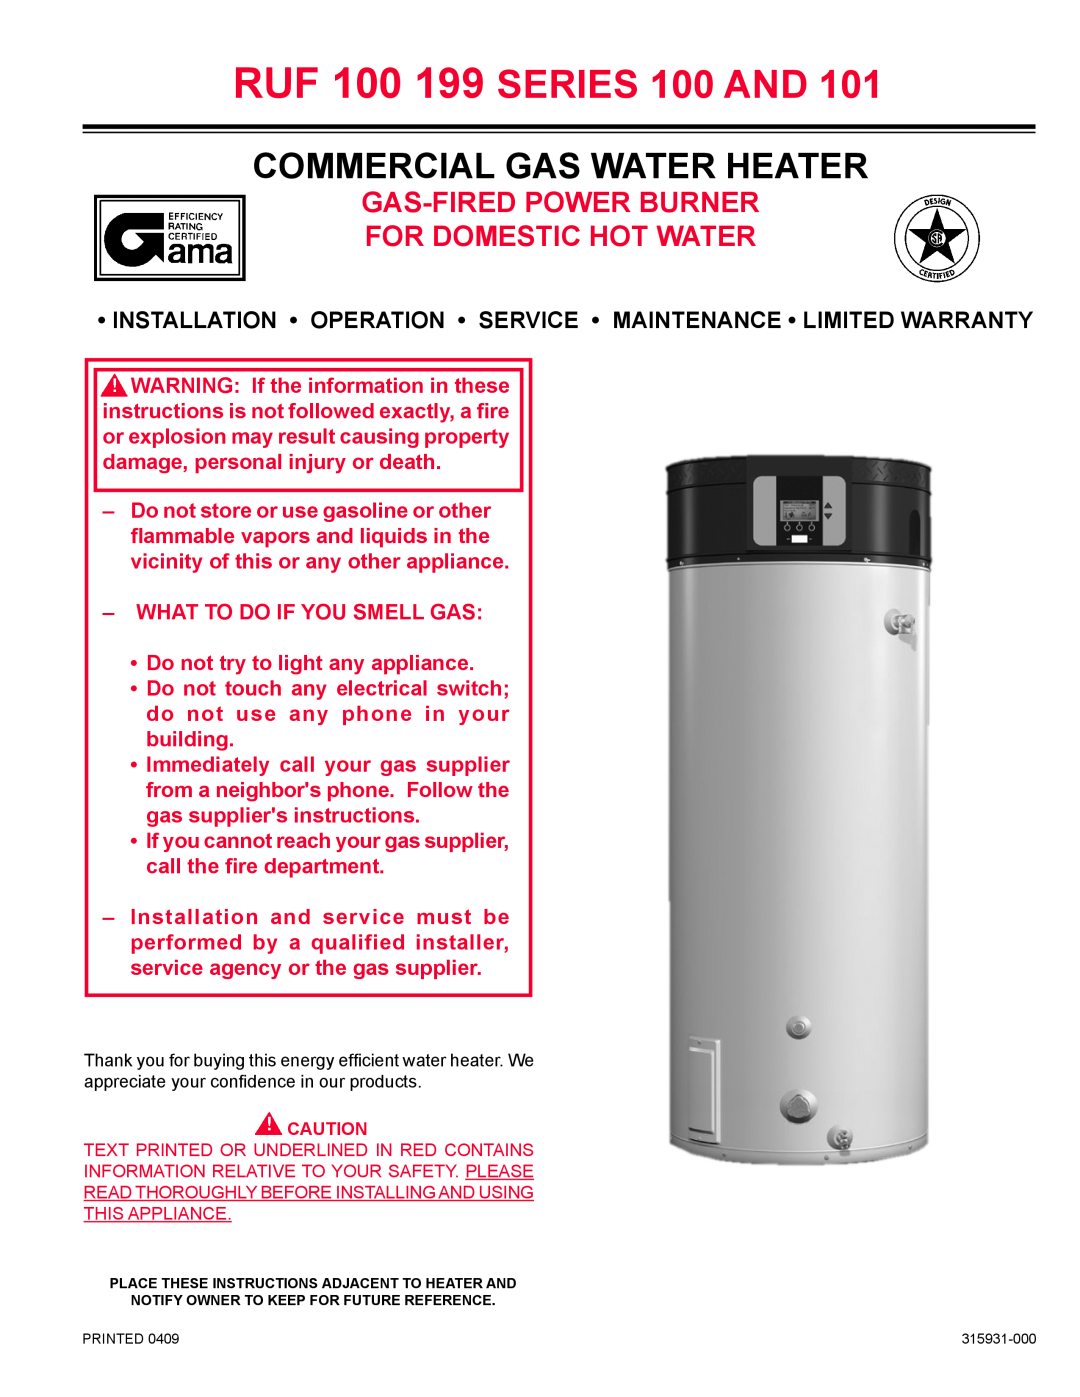 Reliance Water Heaters RUF 100 199 SERIES 100 warranty Installation Operation Service Maintenance Limited Warranty 